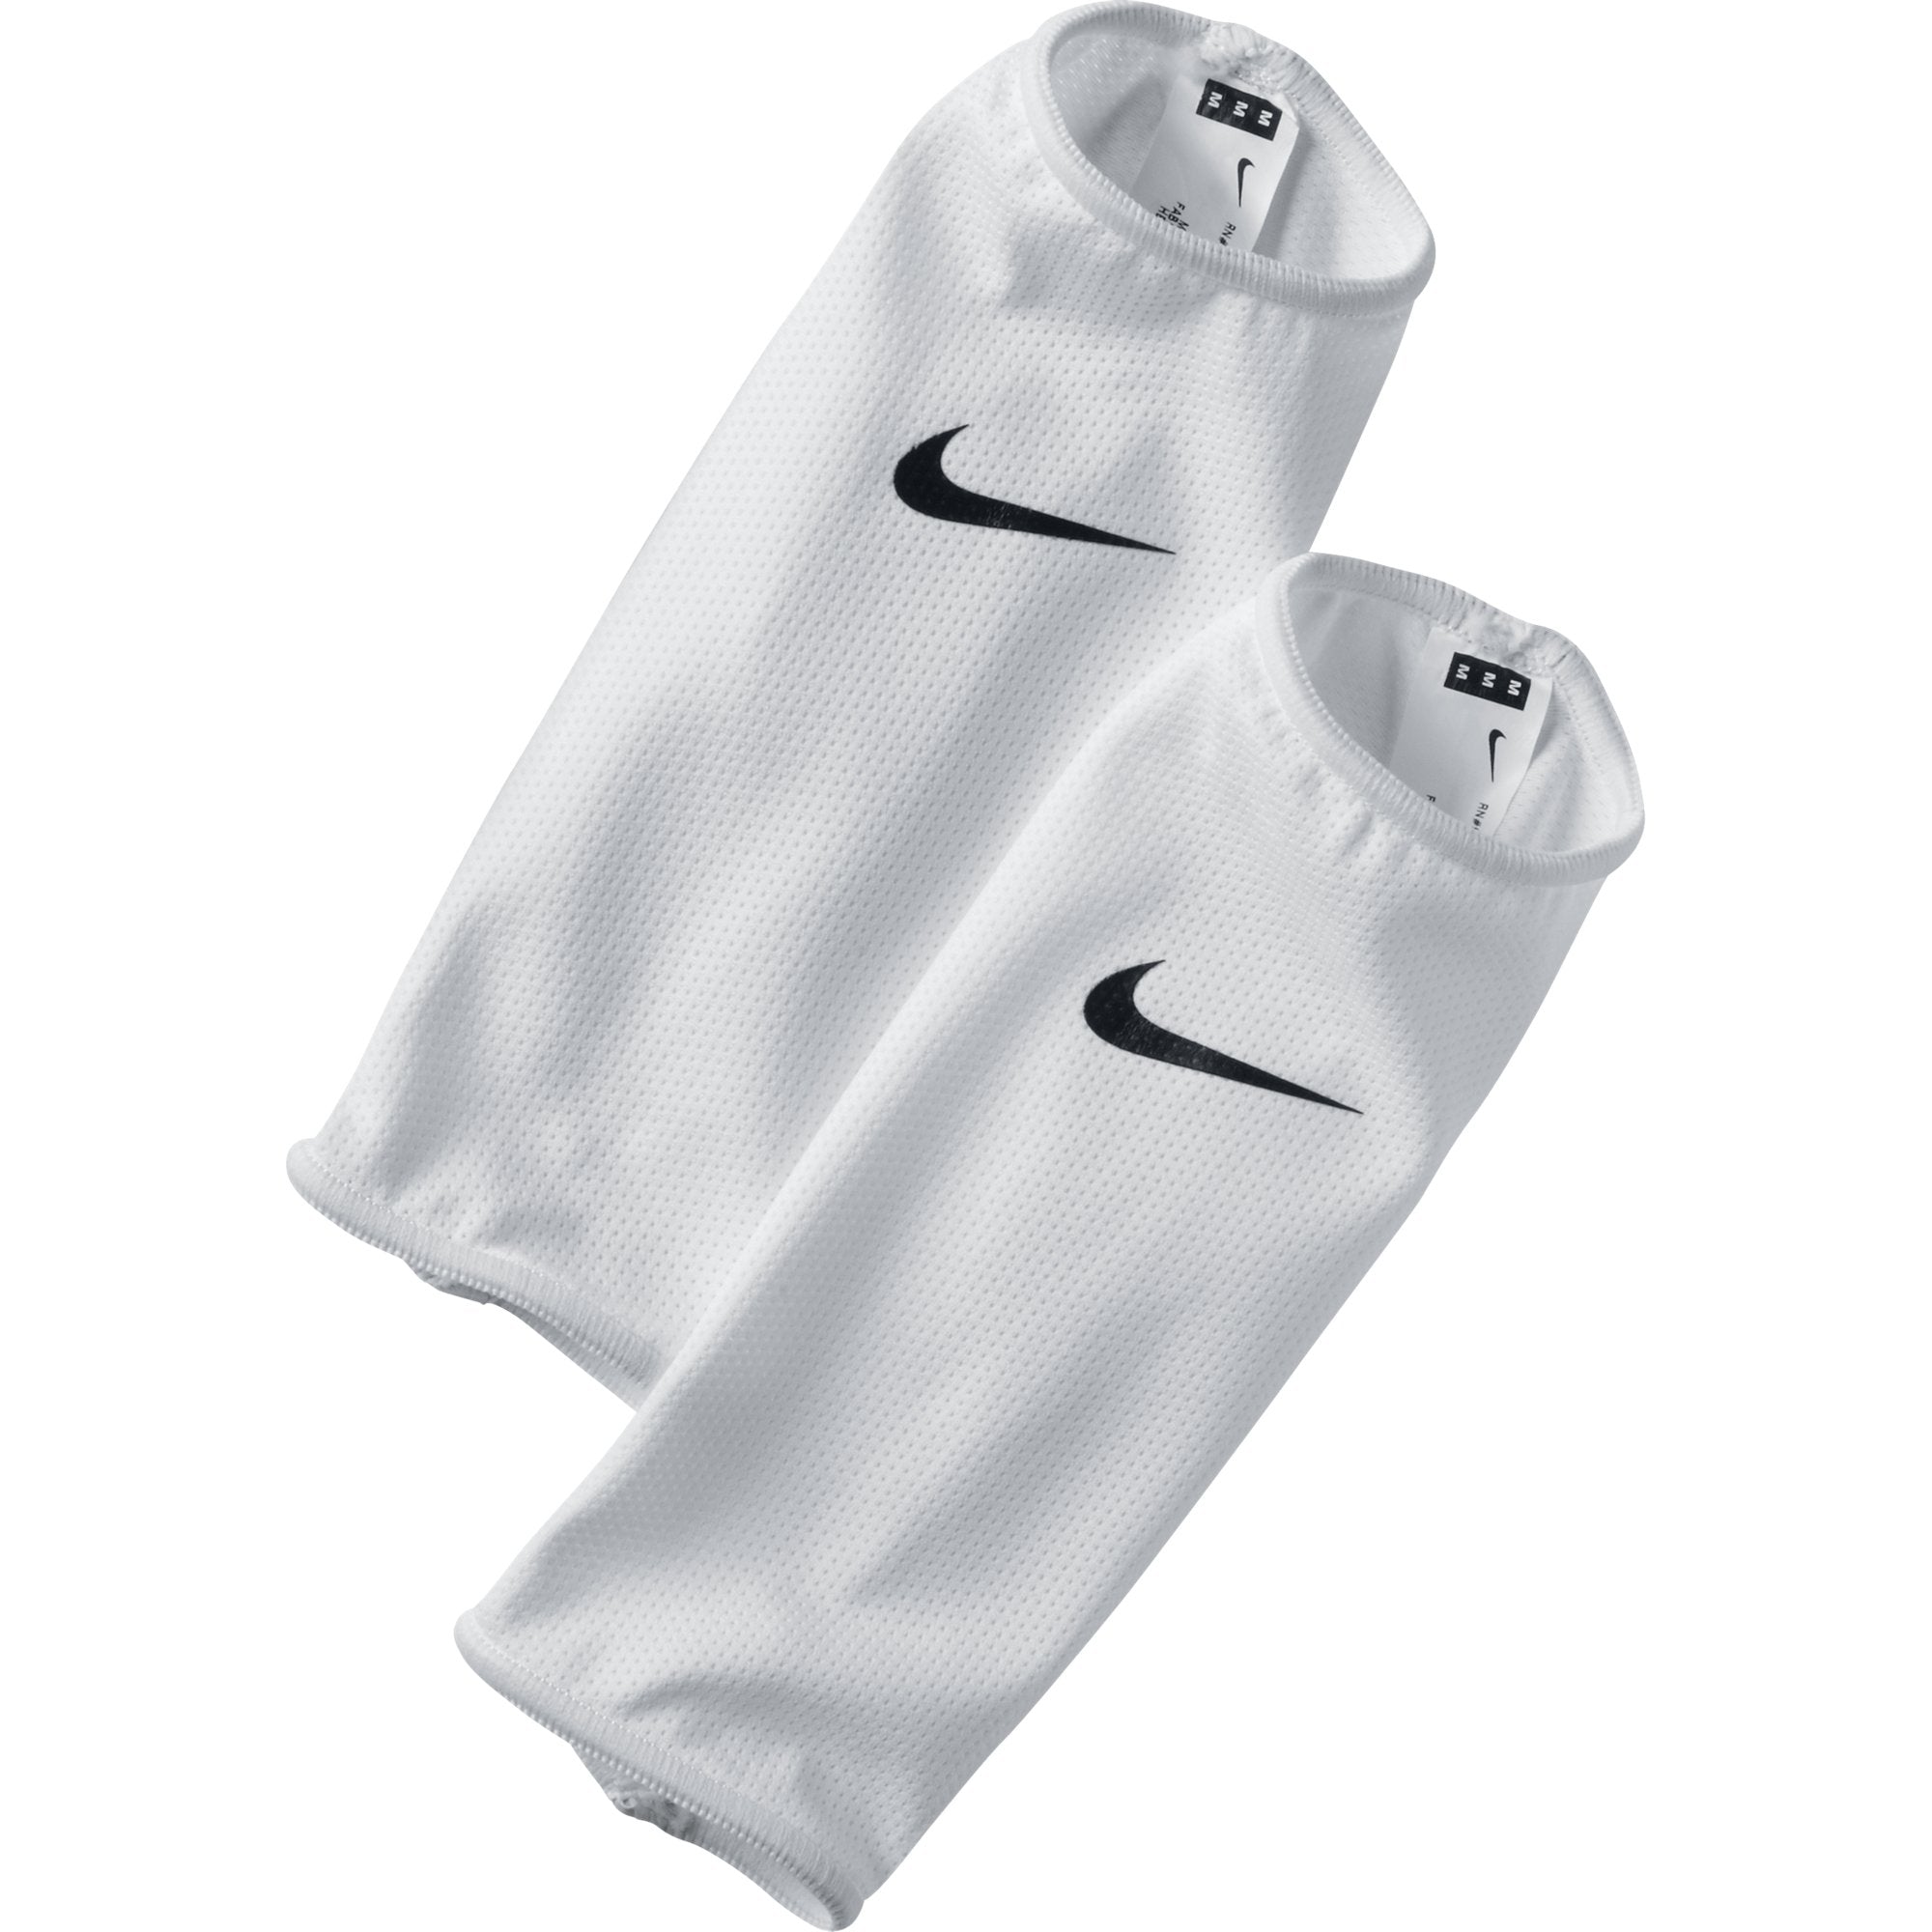 Nike Guard Stay 2 Soccer Sleeve.